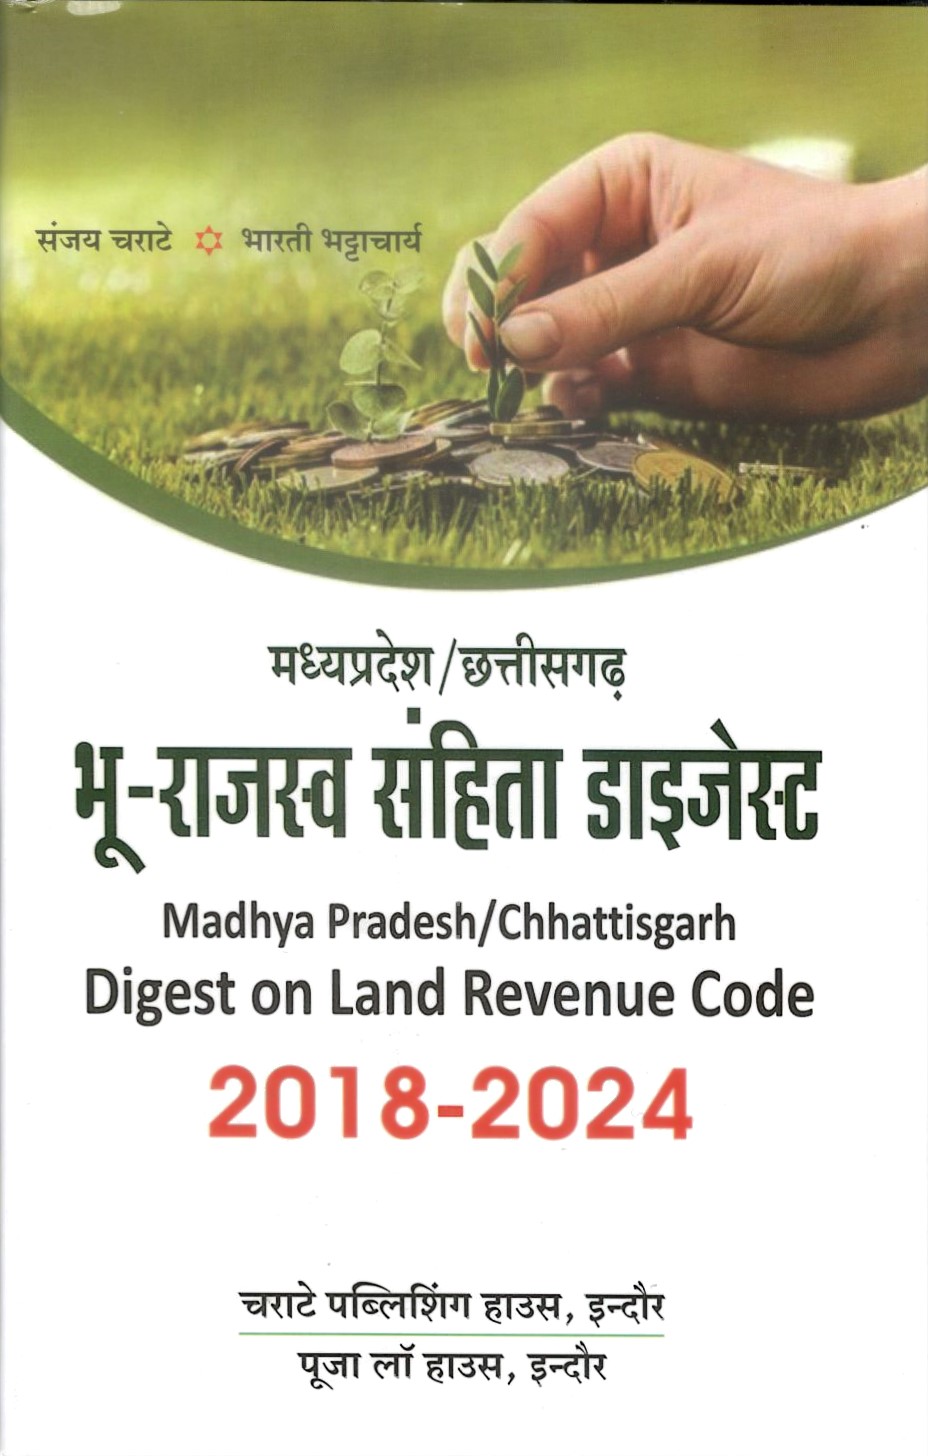 मध्य प्रदेश/छत्तीसगढ़ भू - राजस्व संहिता डाइजेस्ट - Madhya Pradesh/Chhattisgarh Digest on Land Revenue Code 2018 - 2024